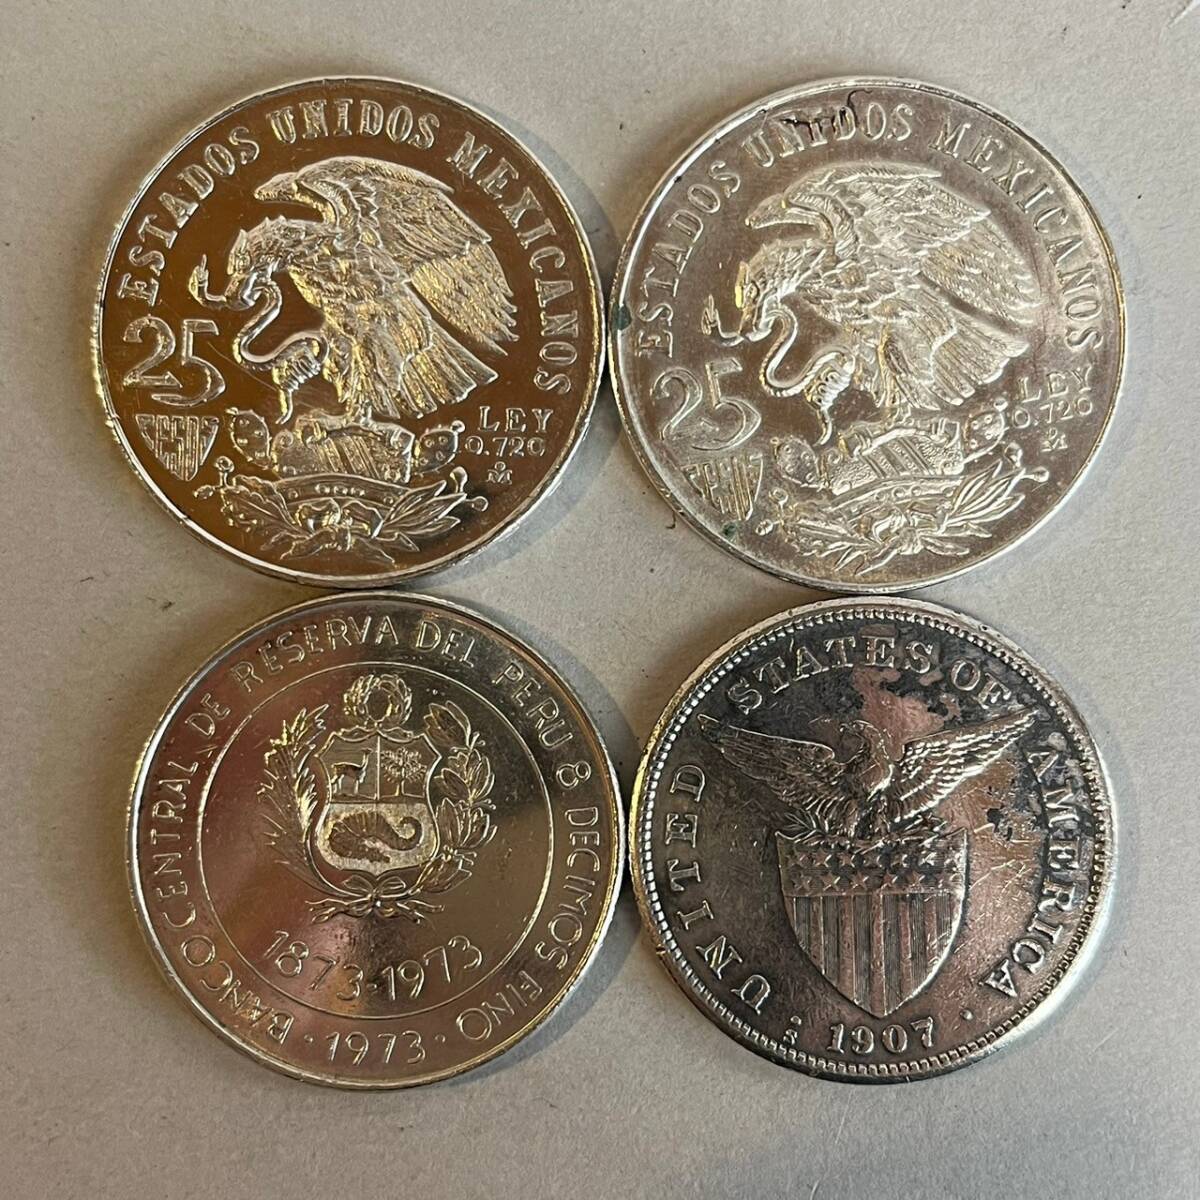 RS223 外国貨幣 銀貨 コイン 4枚 まとめて メキシコオリンピック 25ペソ 100ソル 1ペソ フィリピン 1968 1973 1907 (検)シルバー 硬貨 の画像2